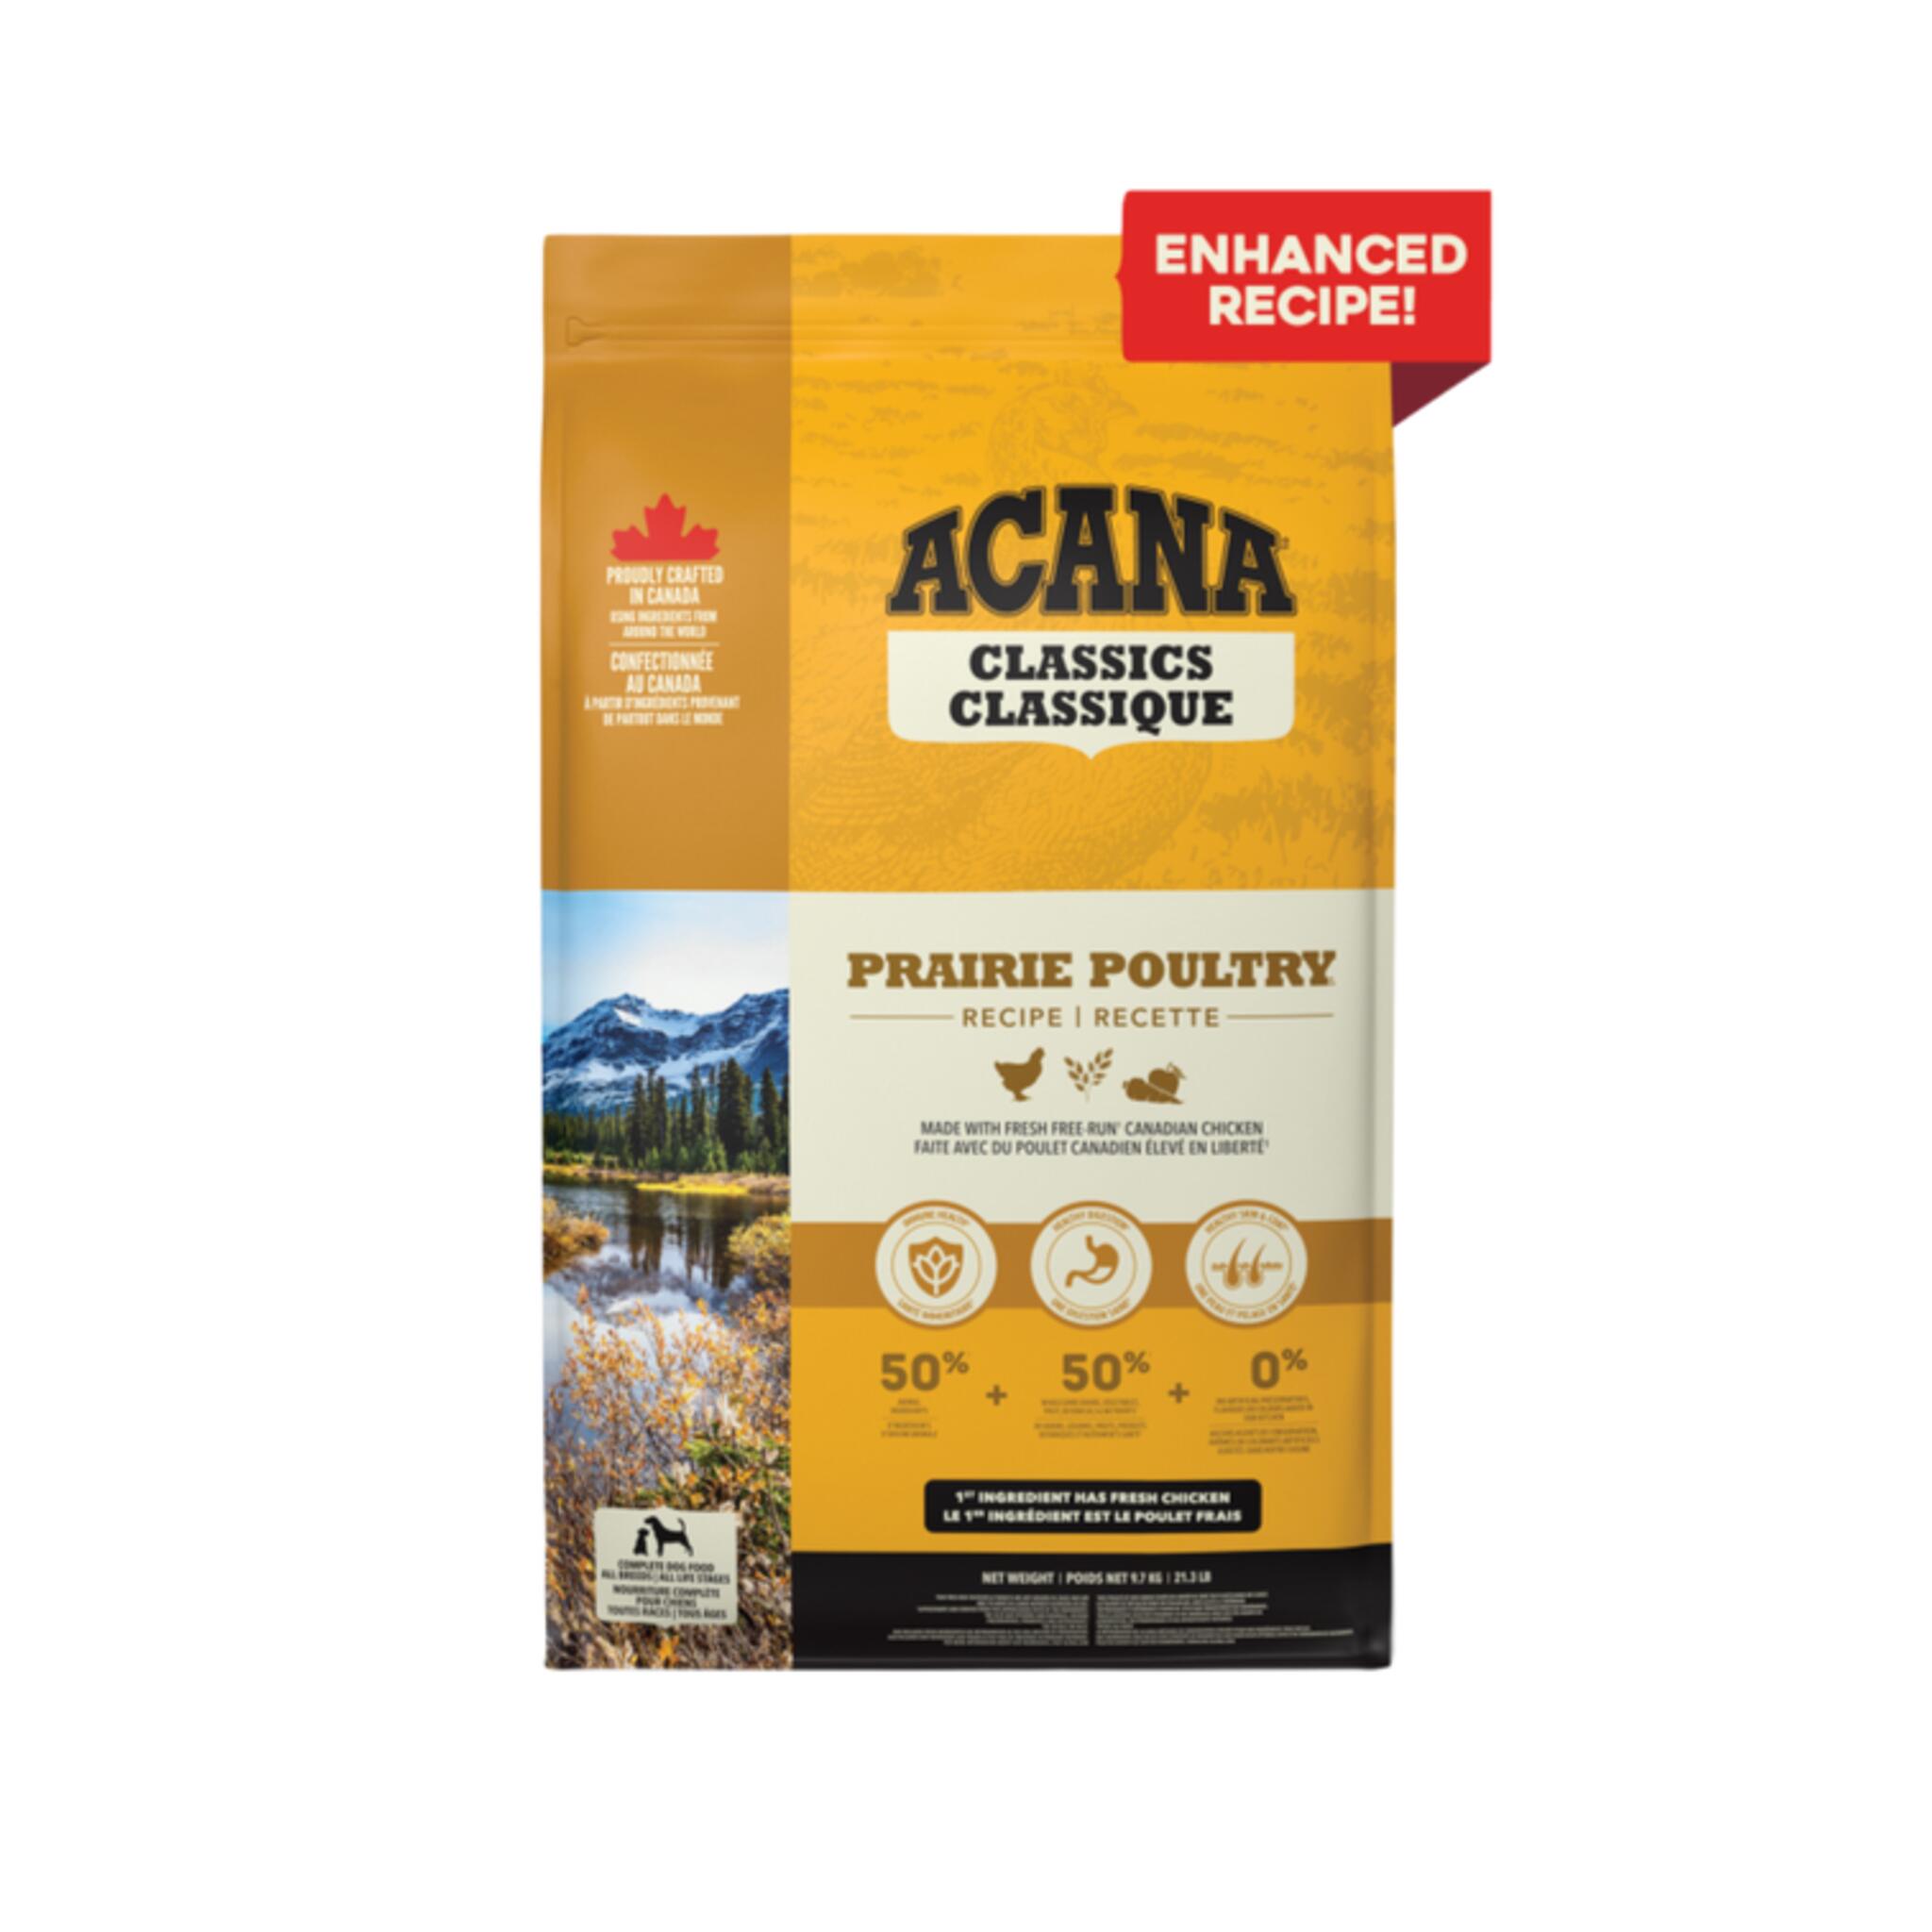 A bag of Acana Classics dog food, Prairie Poultry recipe, 21.3 lb.